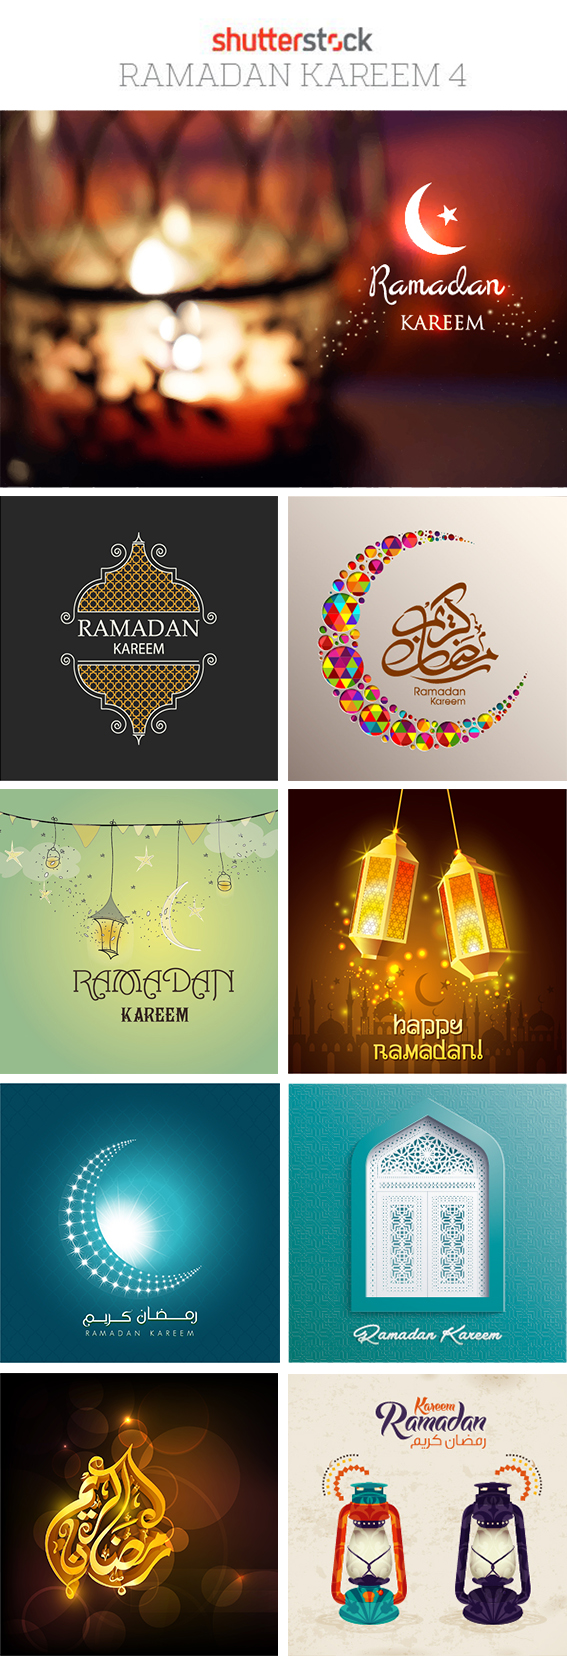 Amazing SS - Ramadan Kareem 4, 25xEPS